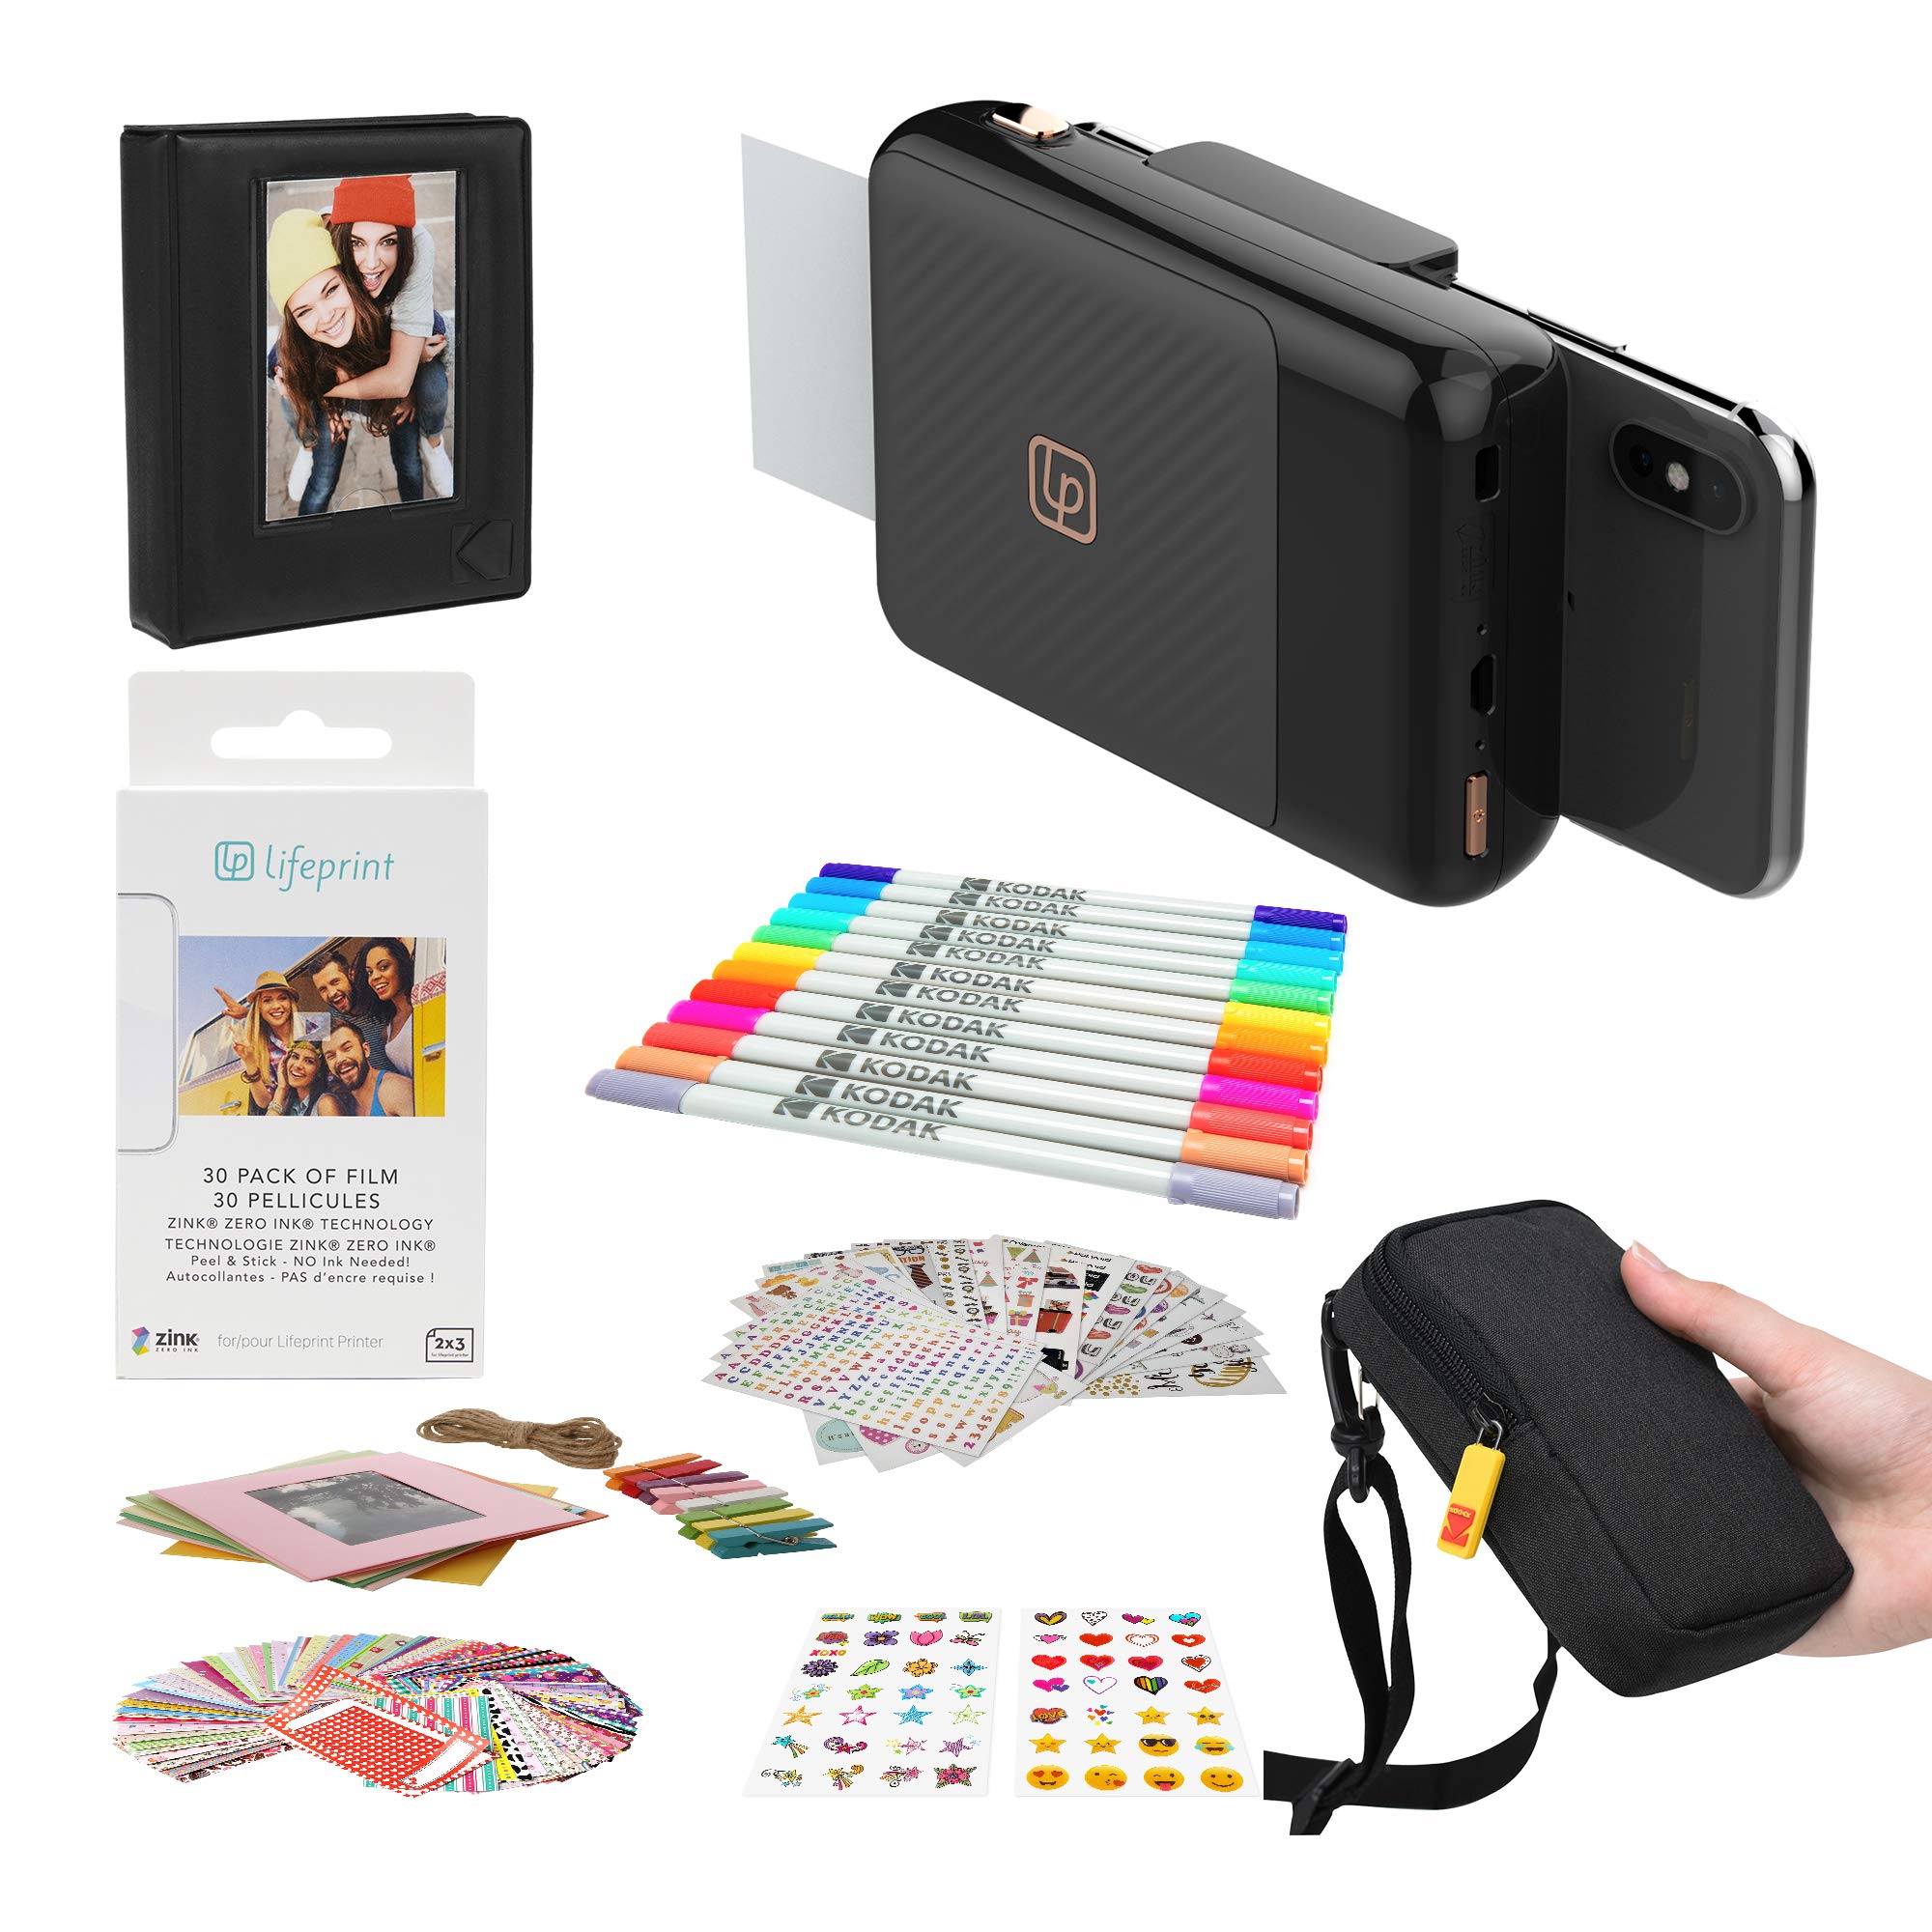 Lifeprint 2x3 Instant Print Camera for iPhone (Black) Stickers Bundle